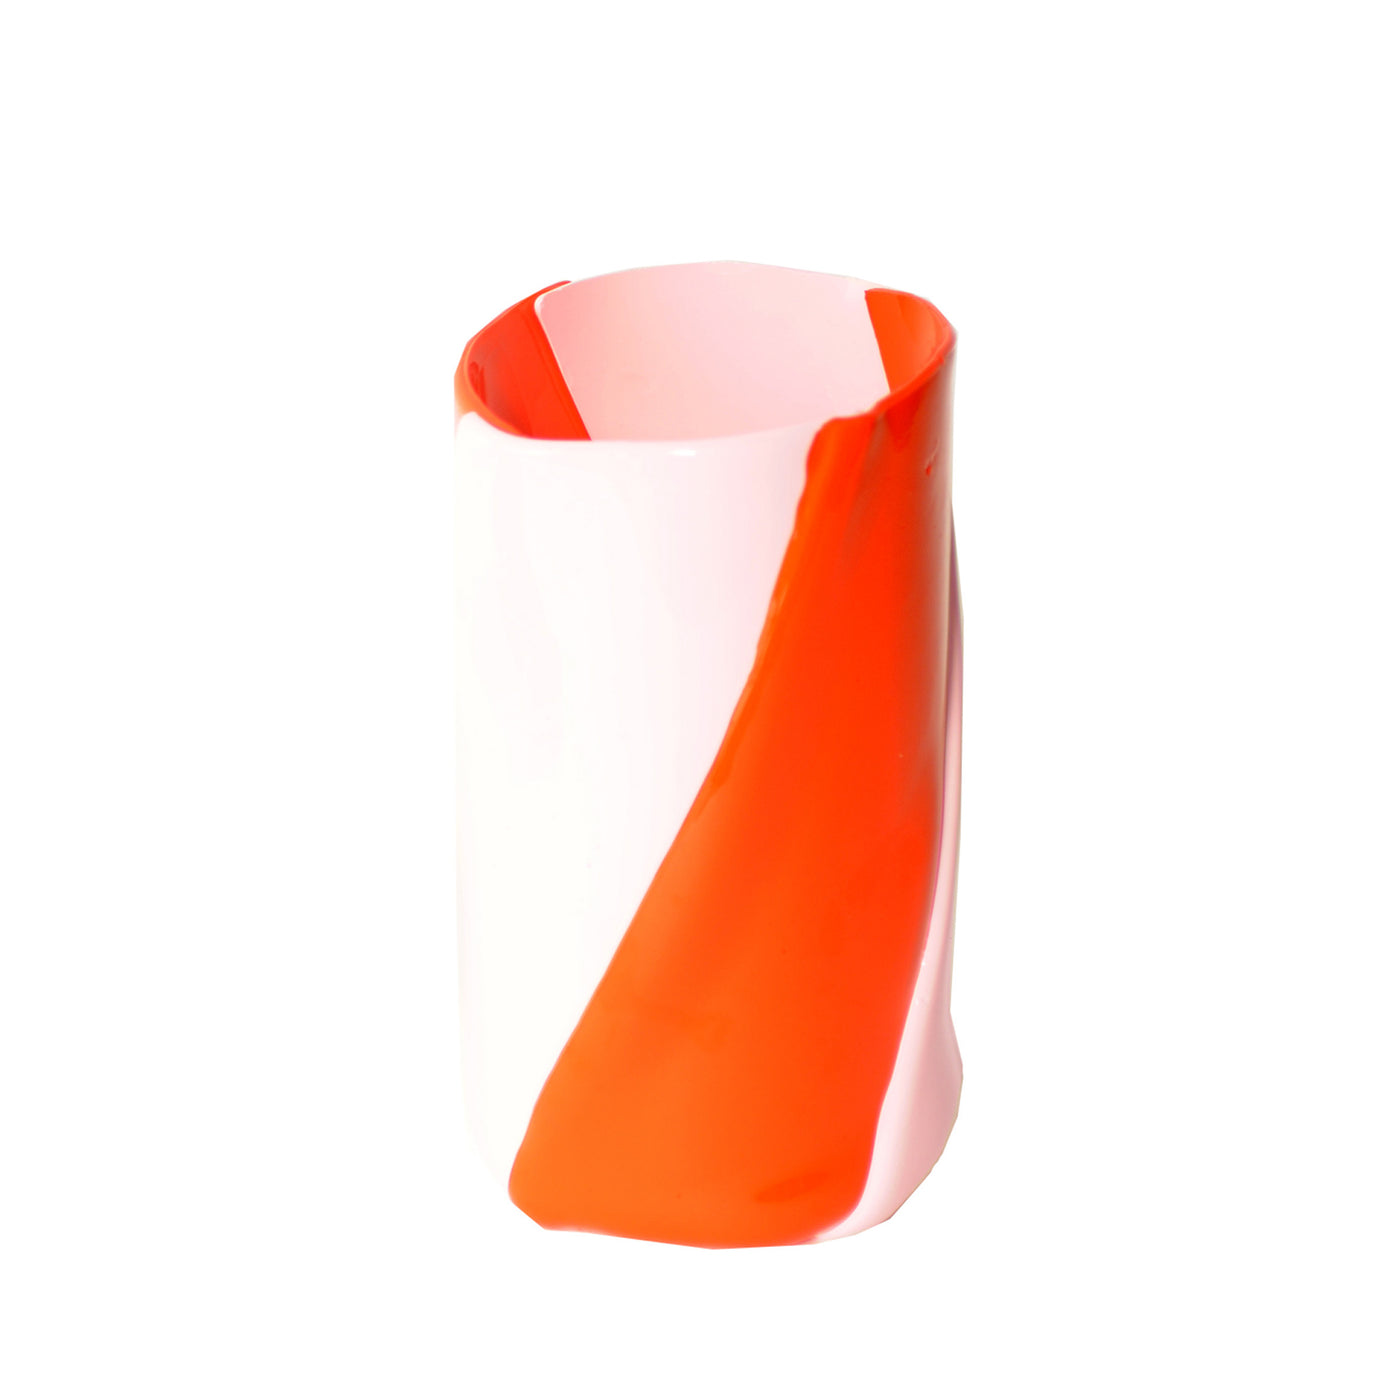 Resin Vase TWIRL Orange and Pink by Enzo Mari for Lezioni 01